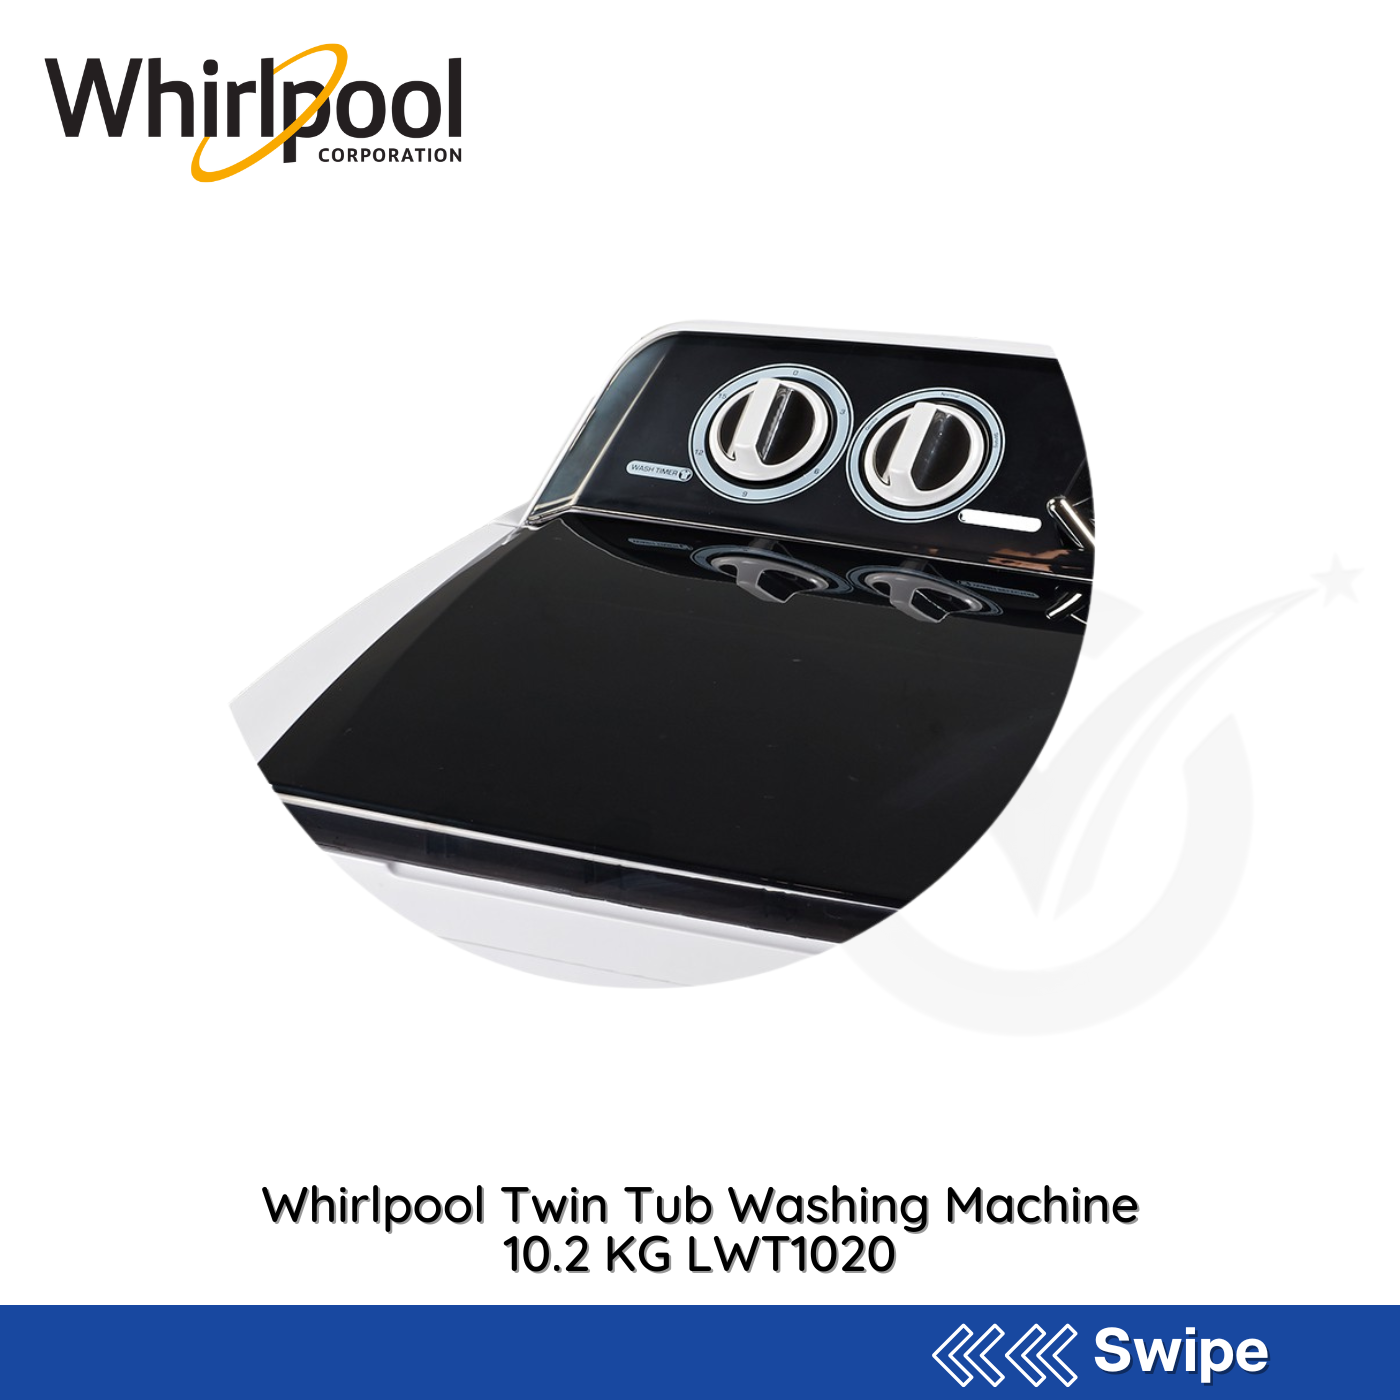 Whirlpool Twin Tub Washing Machine 10.2 KG LWT1020